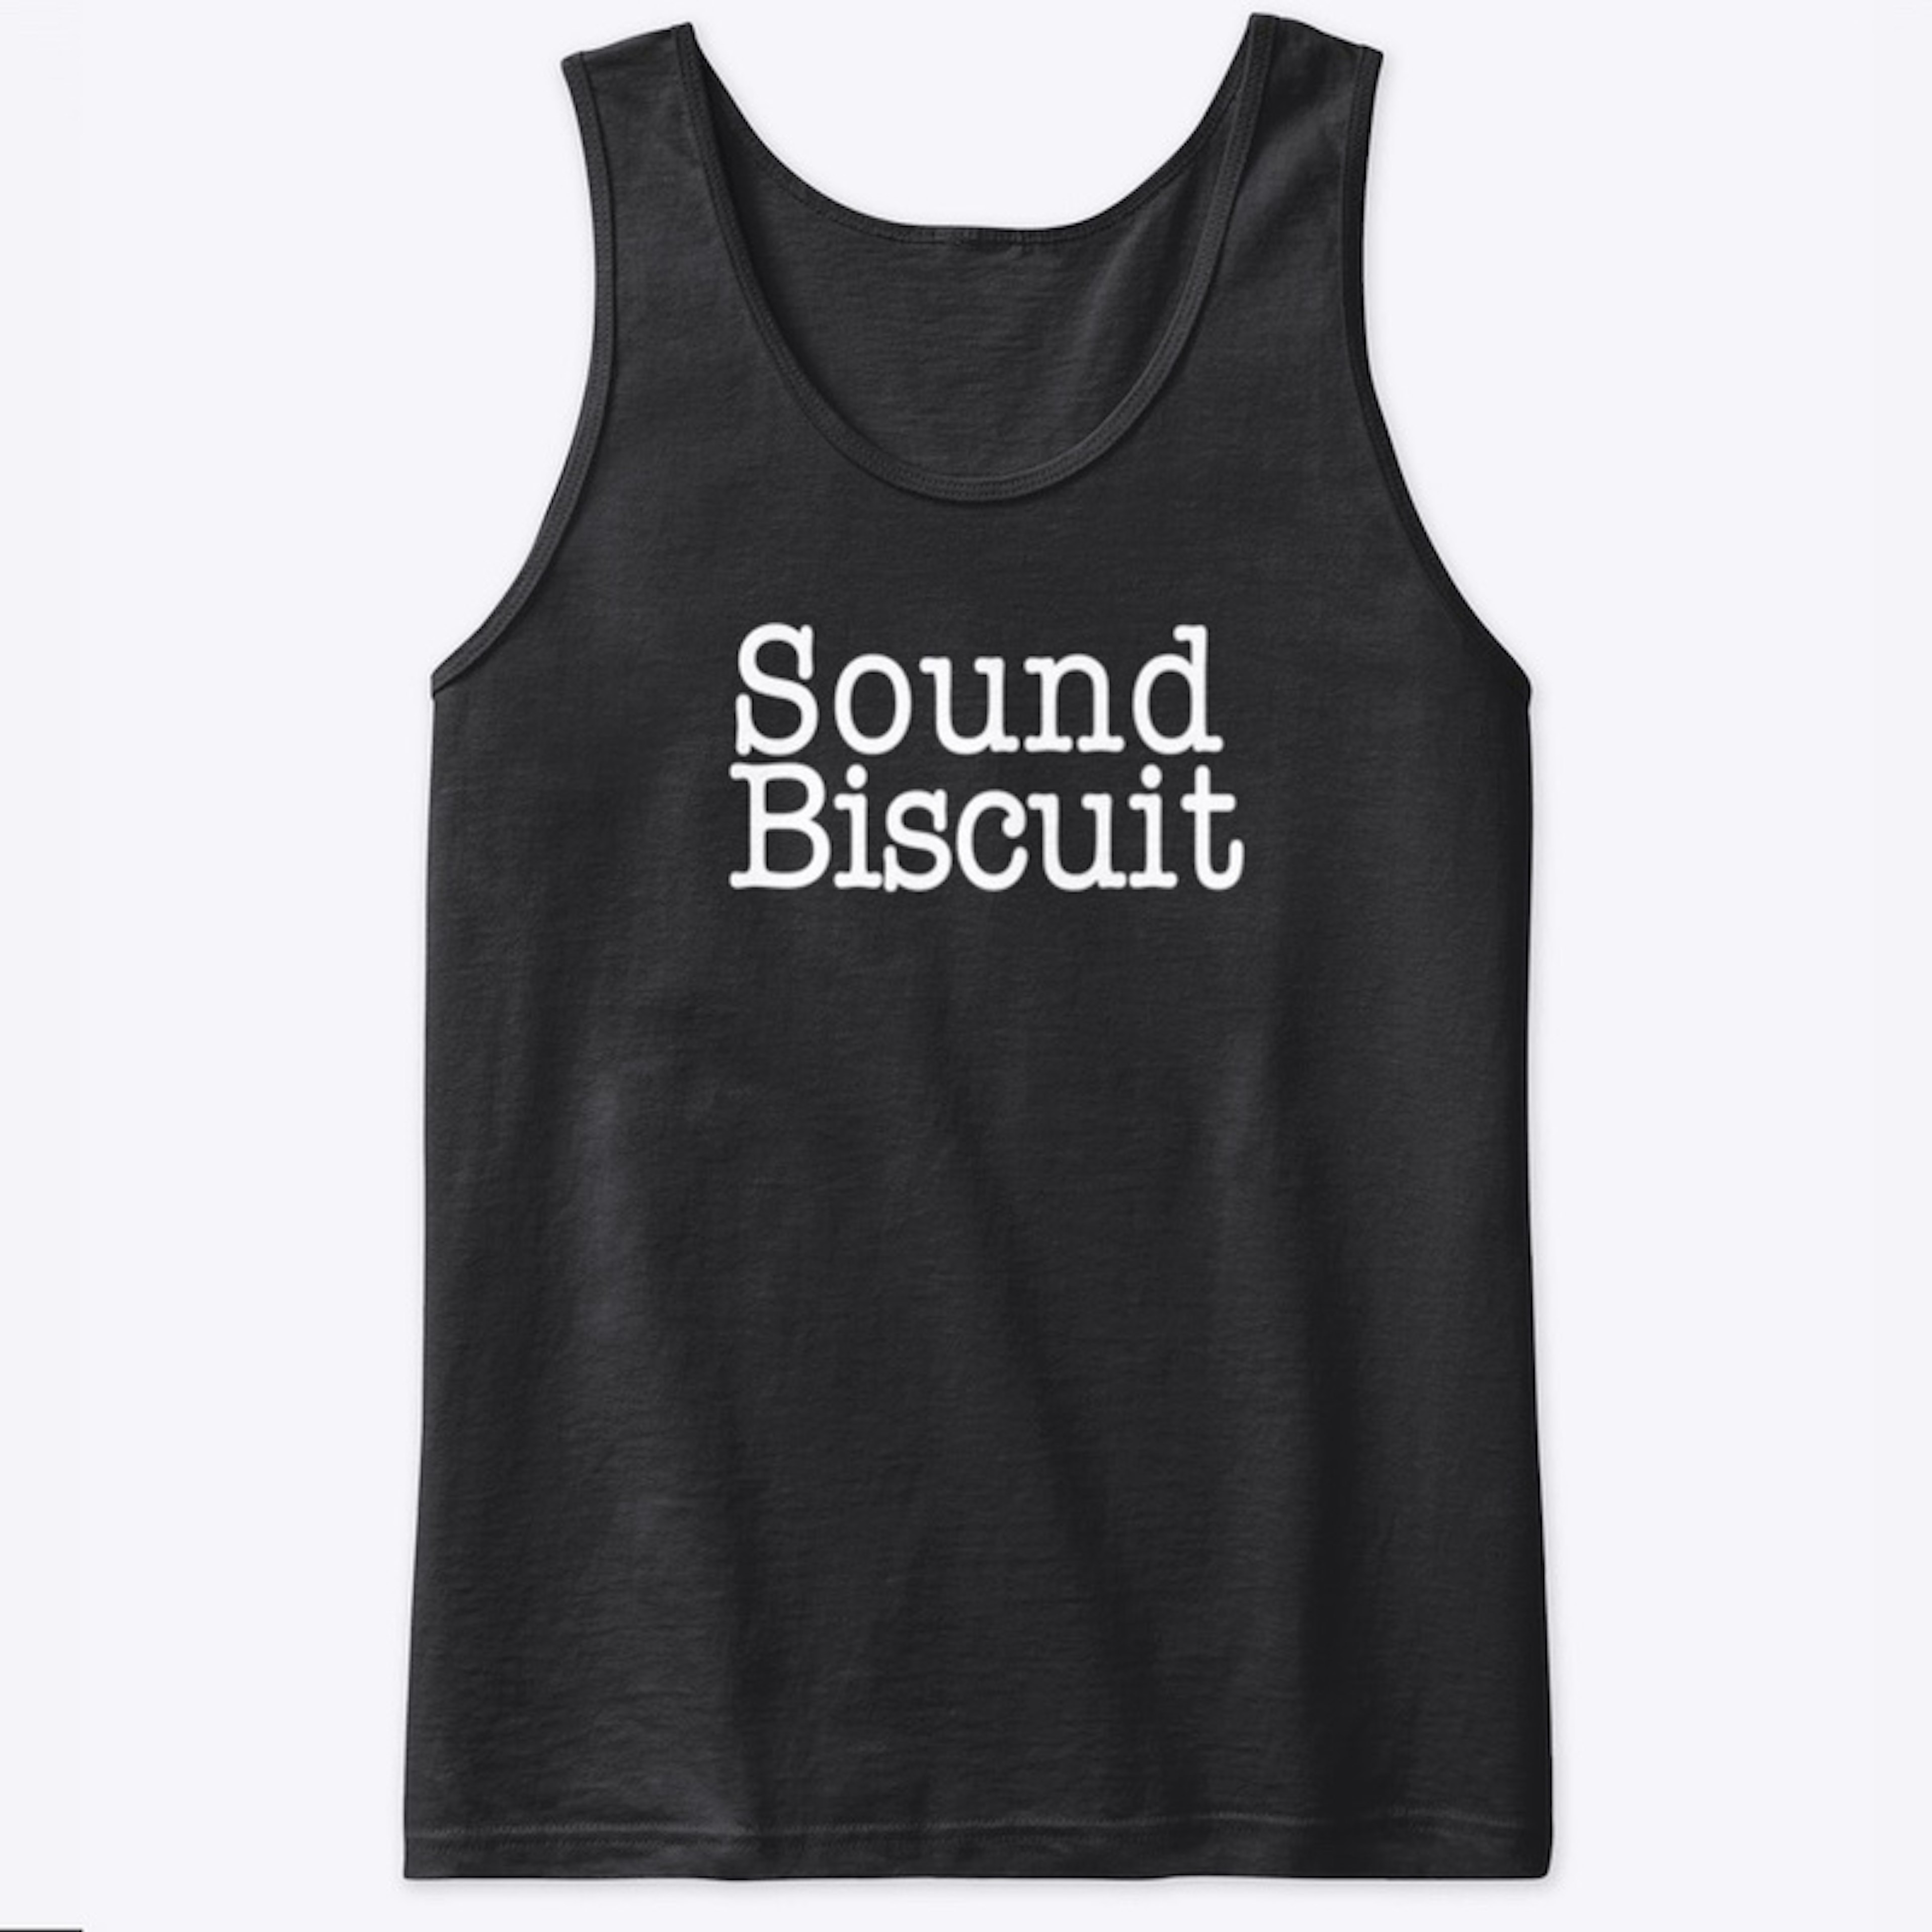 Sound Biscuit Apparel 